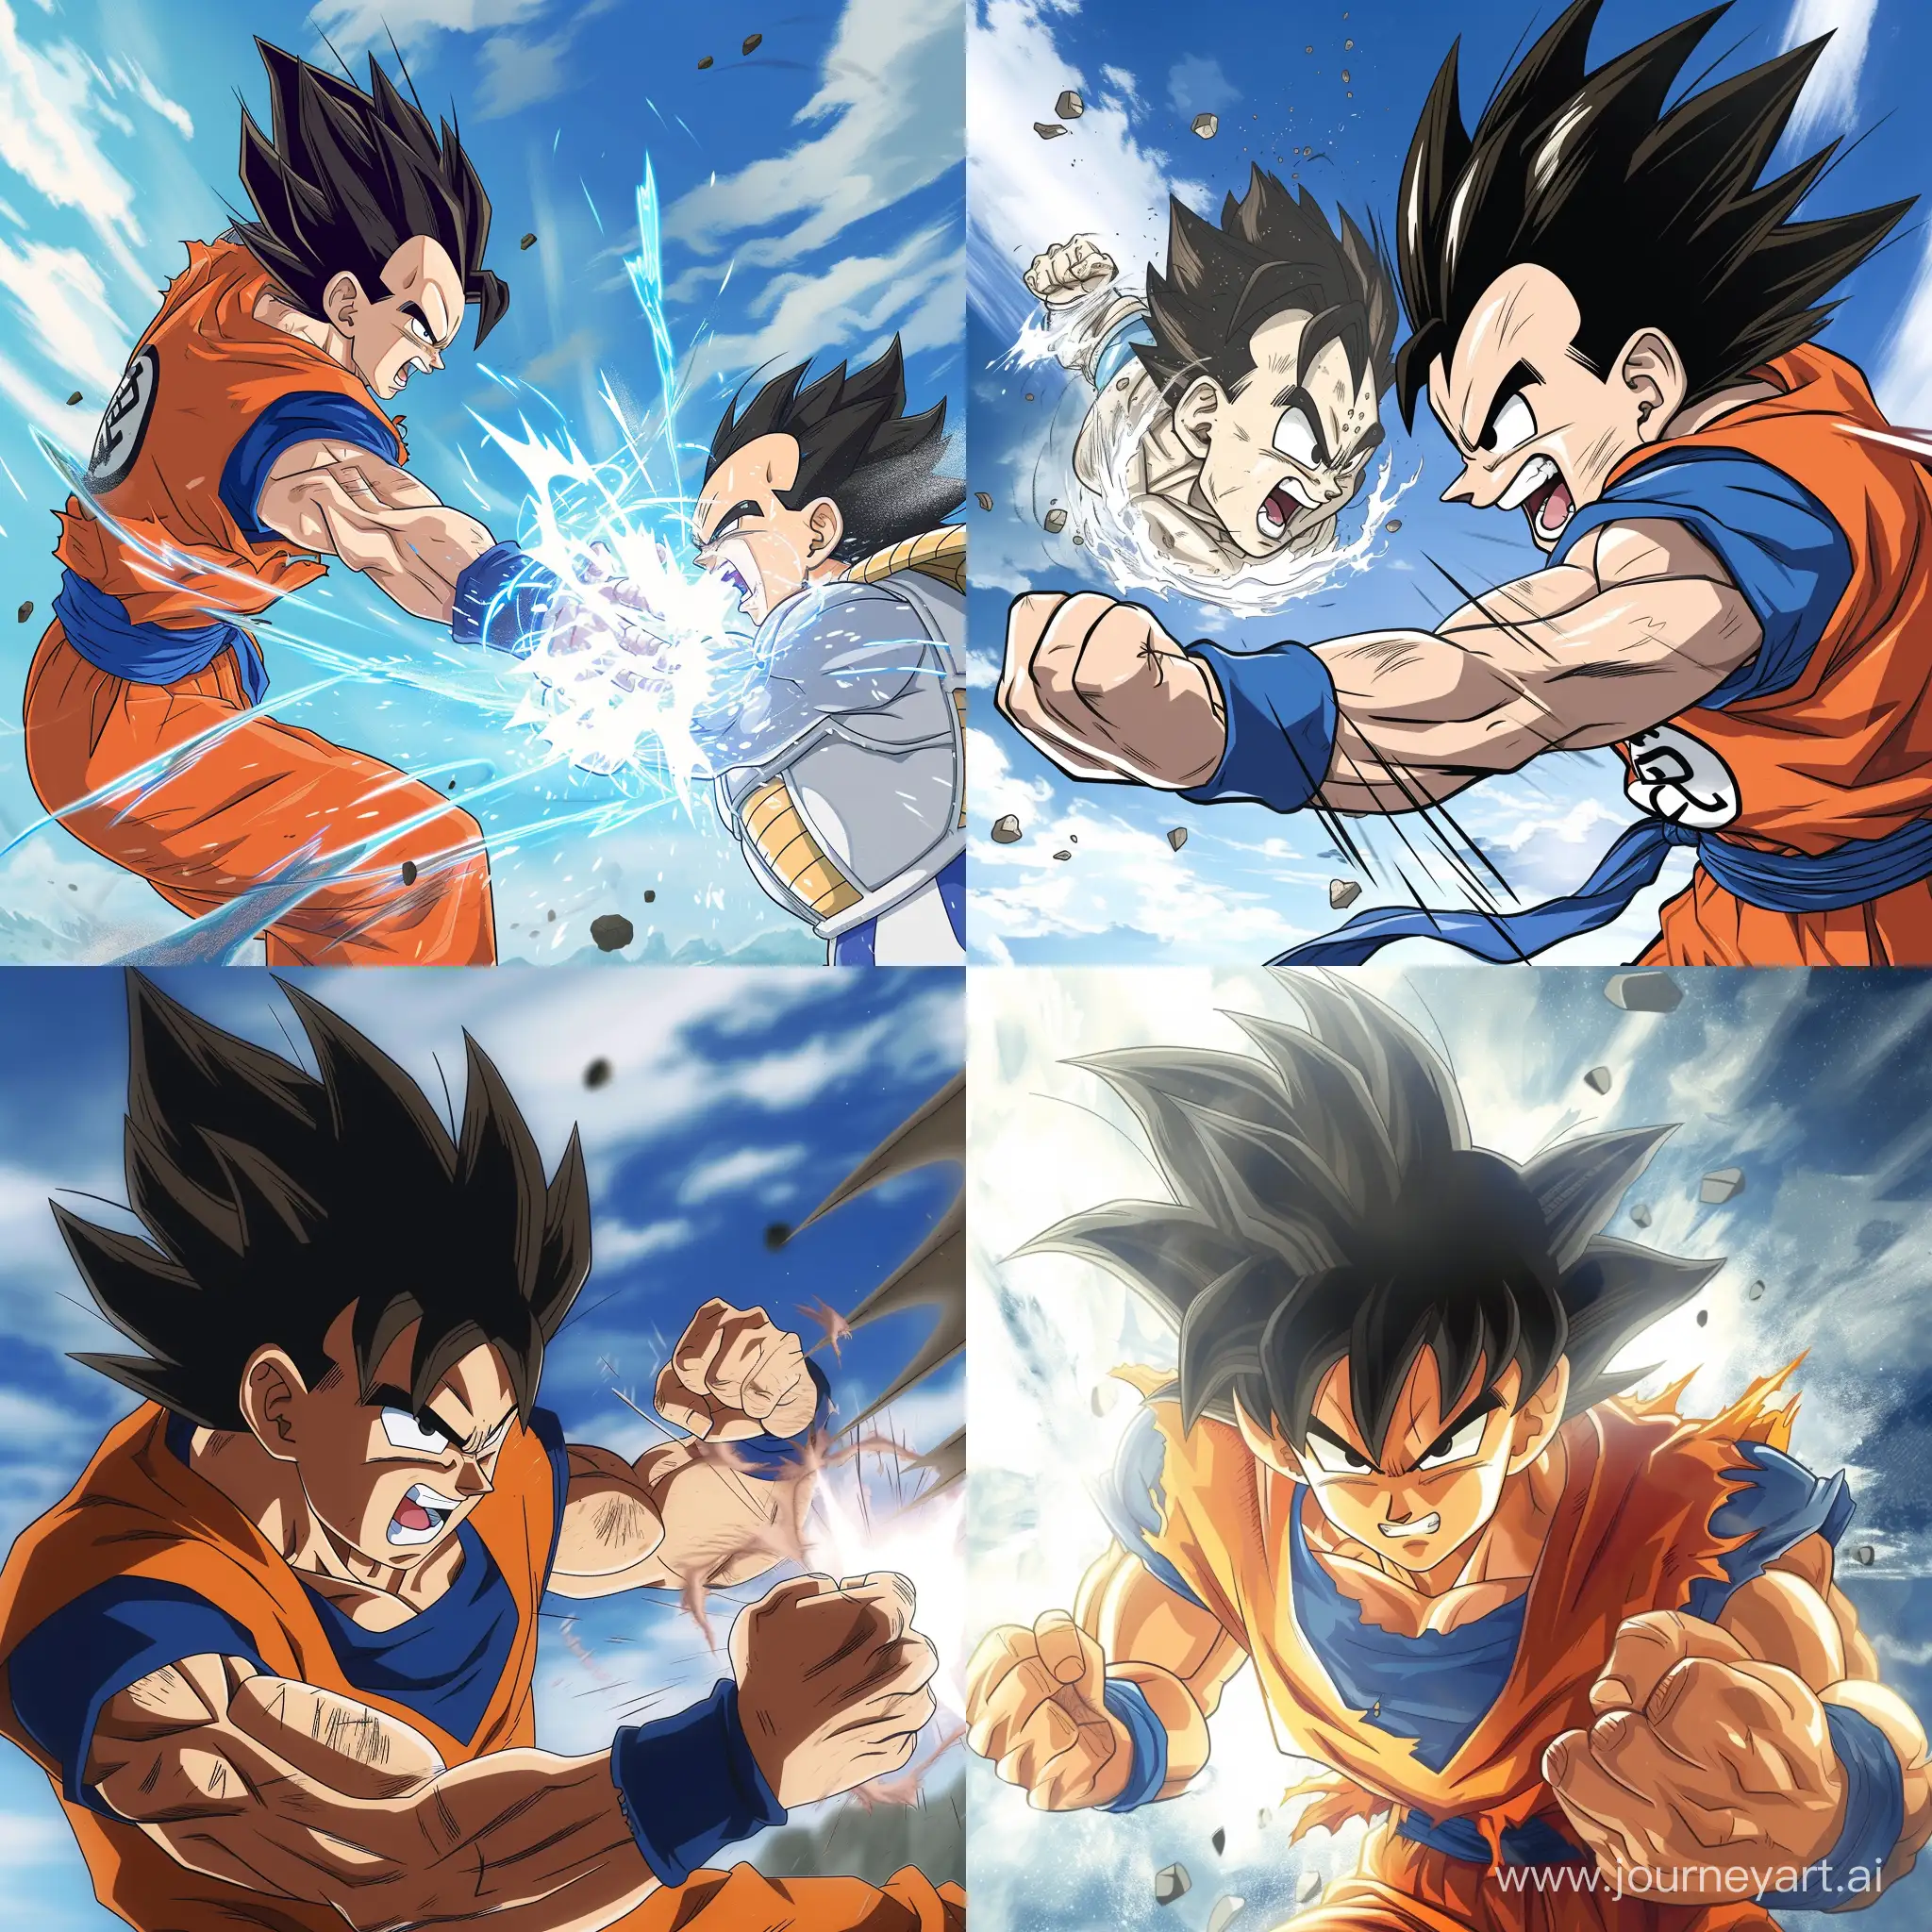 Epic-Goku-vs-Vegeta-Battle-in-a-11-Aspect-Ratio